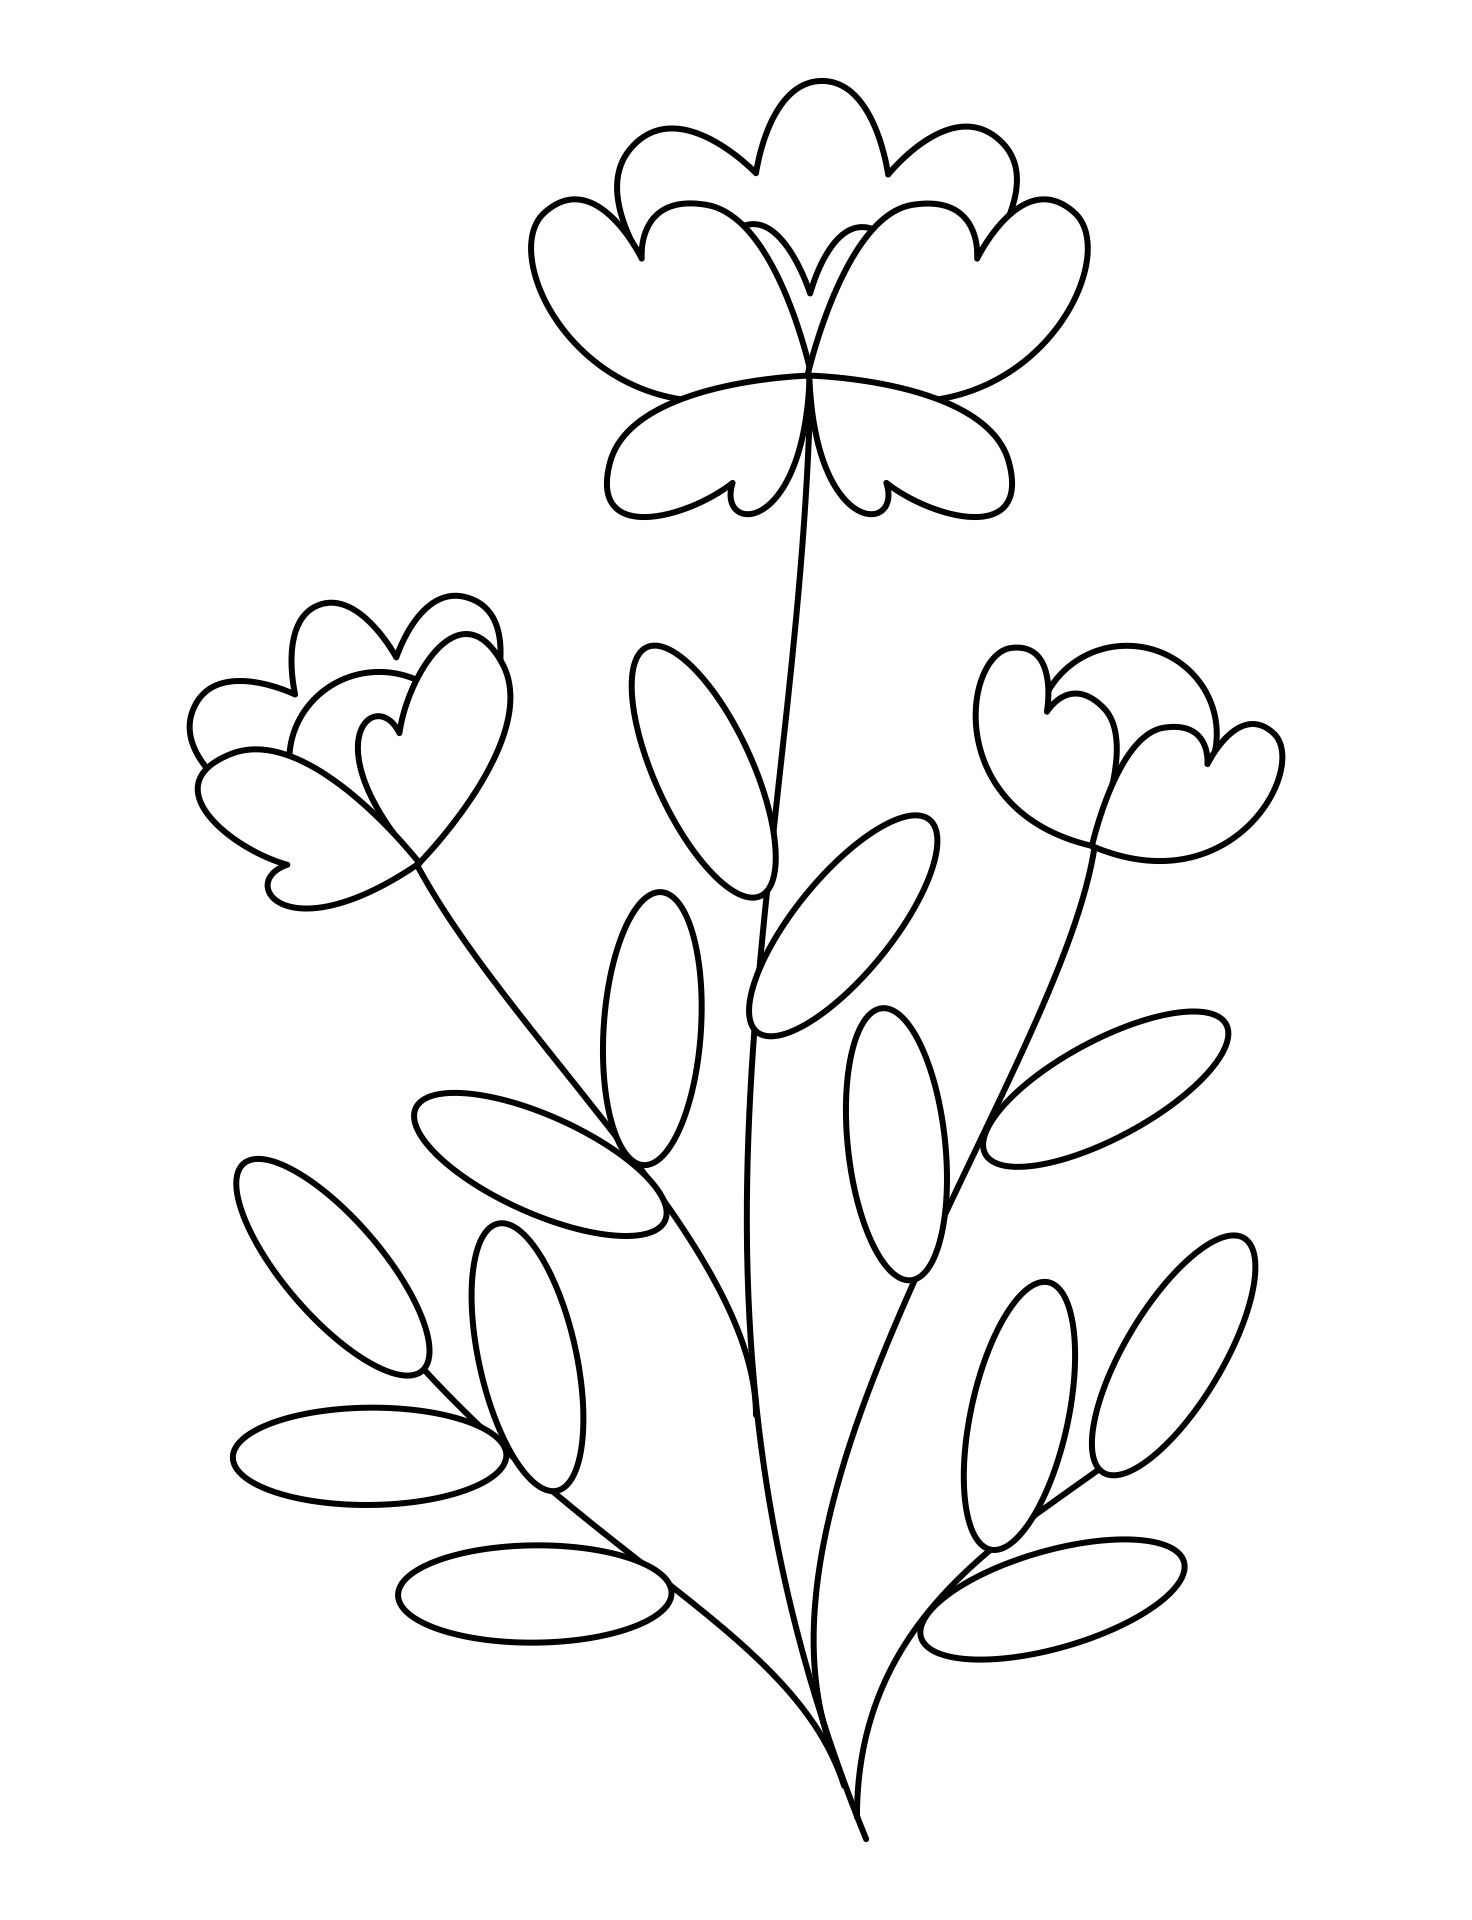 Applique Flower Patterns Printable